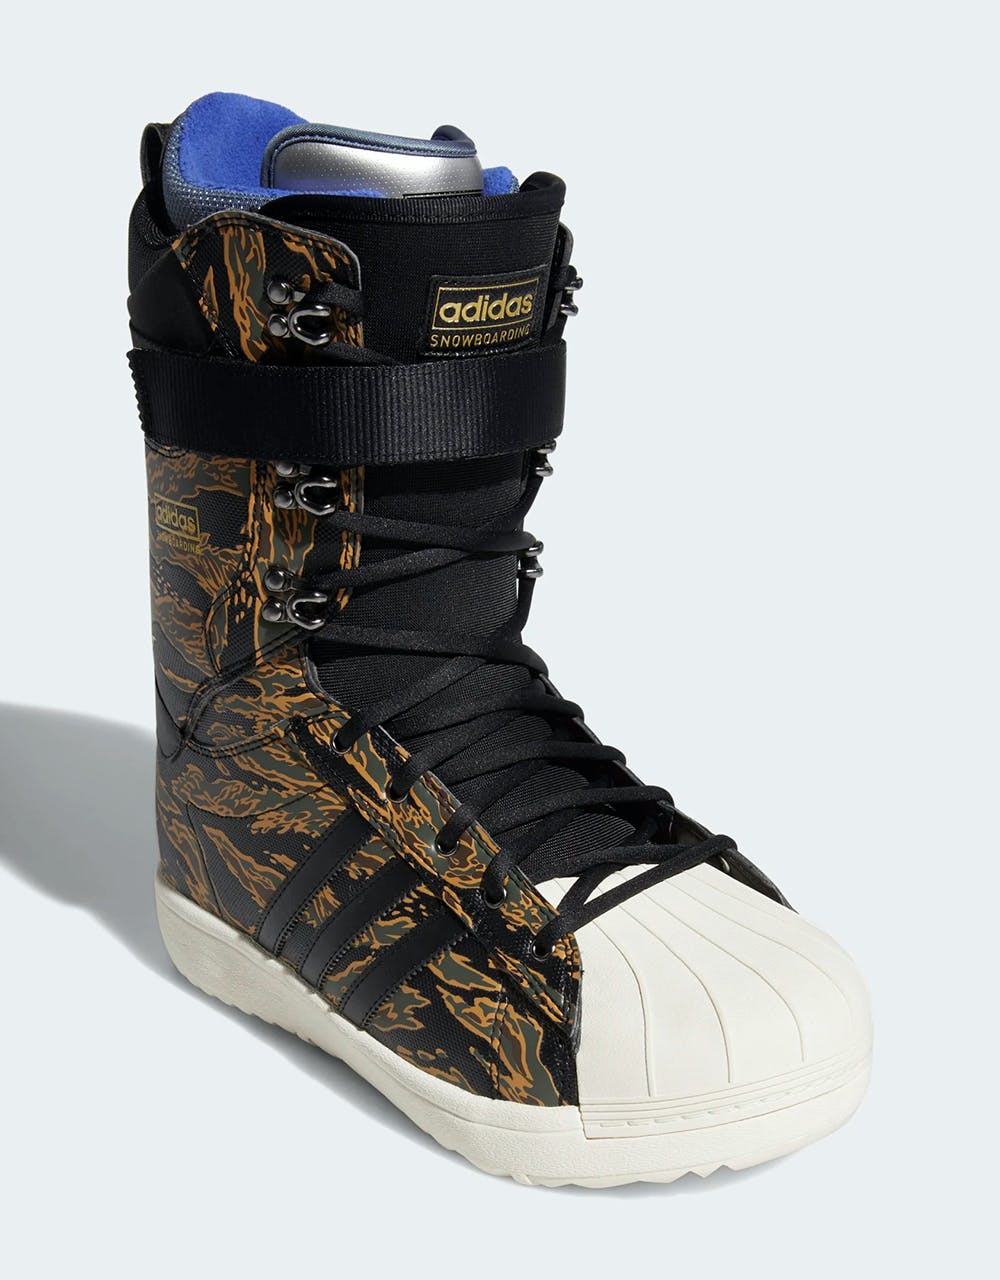 Adidas Superstar ADV 2020 Snowboard Boots - Core Black/Night Cargo/Raw